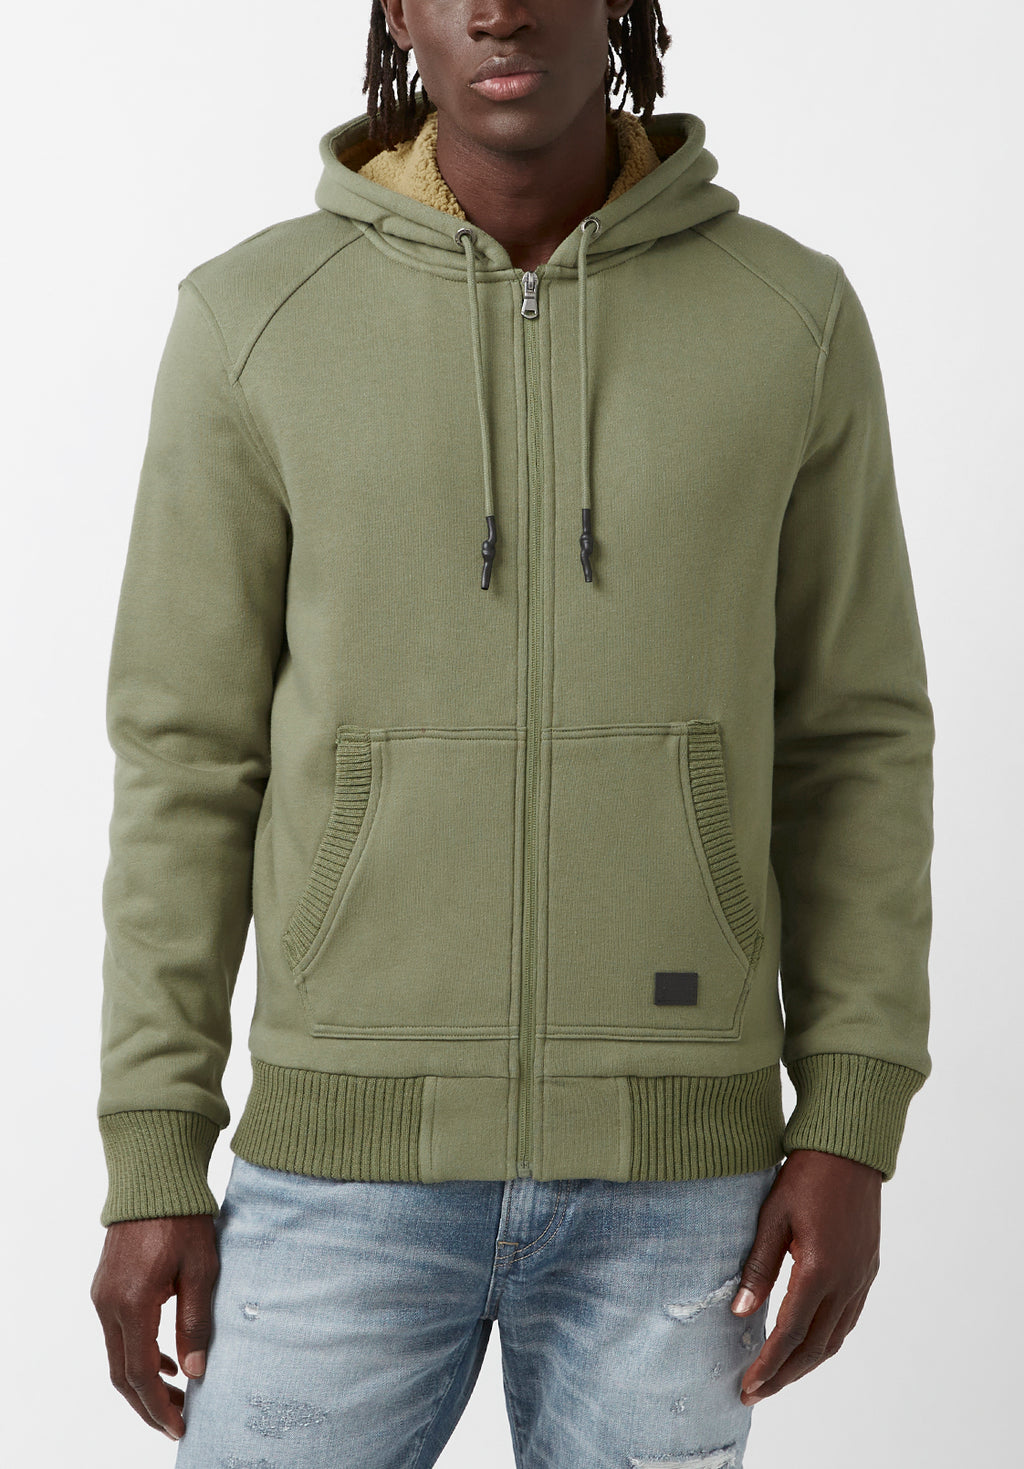 Fasox Green Men’s Sweatshirt - BM24161